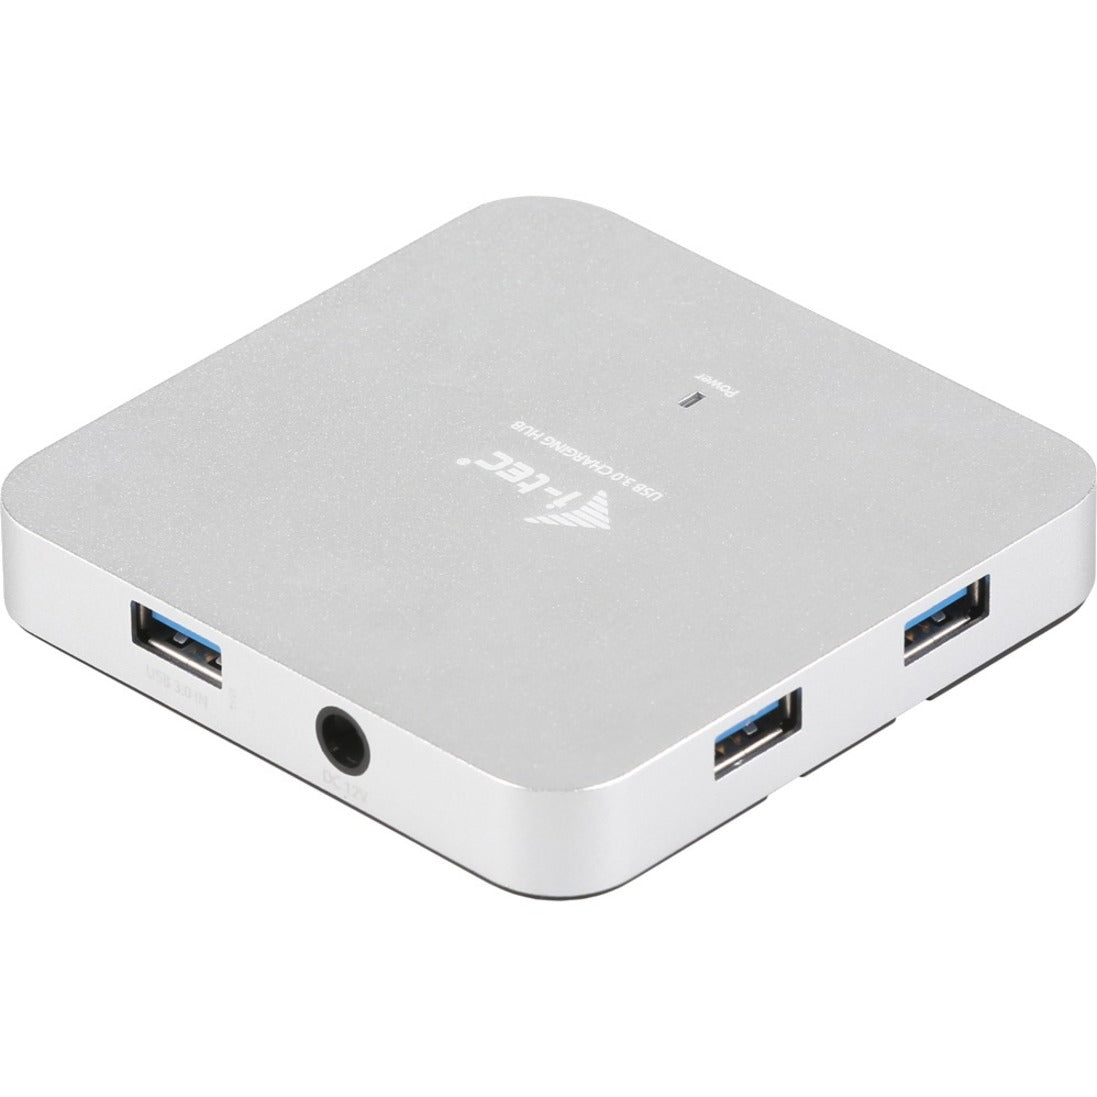 i-tec U3HUBMETAL4 USB 3.0 Metal Charging Hub 4 Port, Fast Data Transfer and Convenient Charging